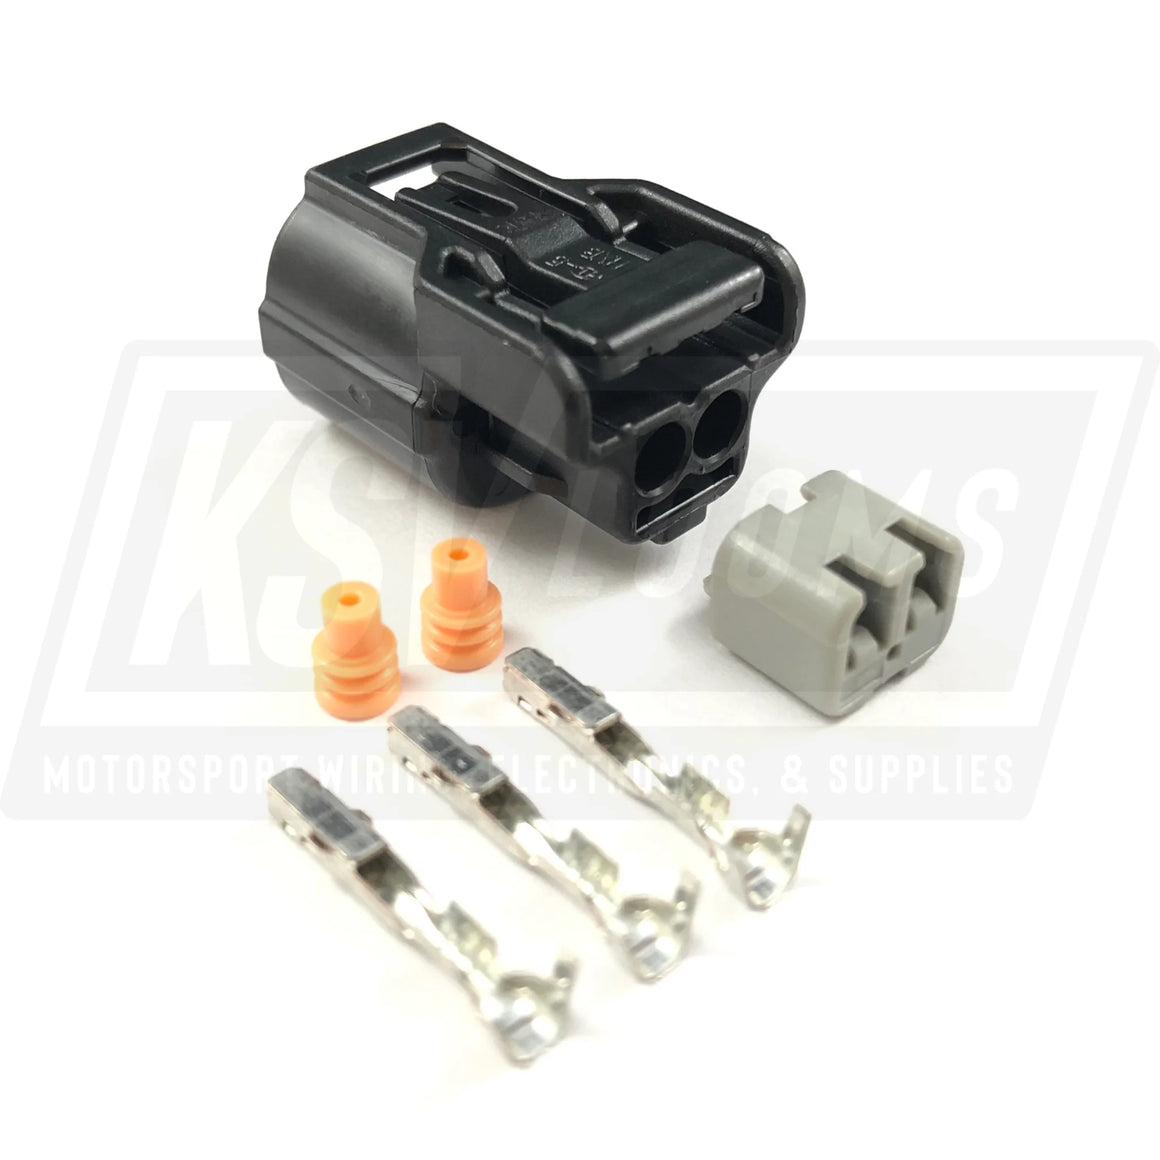 2-Way Connector Kit For Honda K-Series K20 K24 Air Temp Sensor (22-20 Awg)